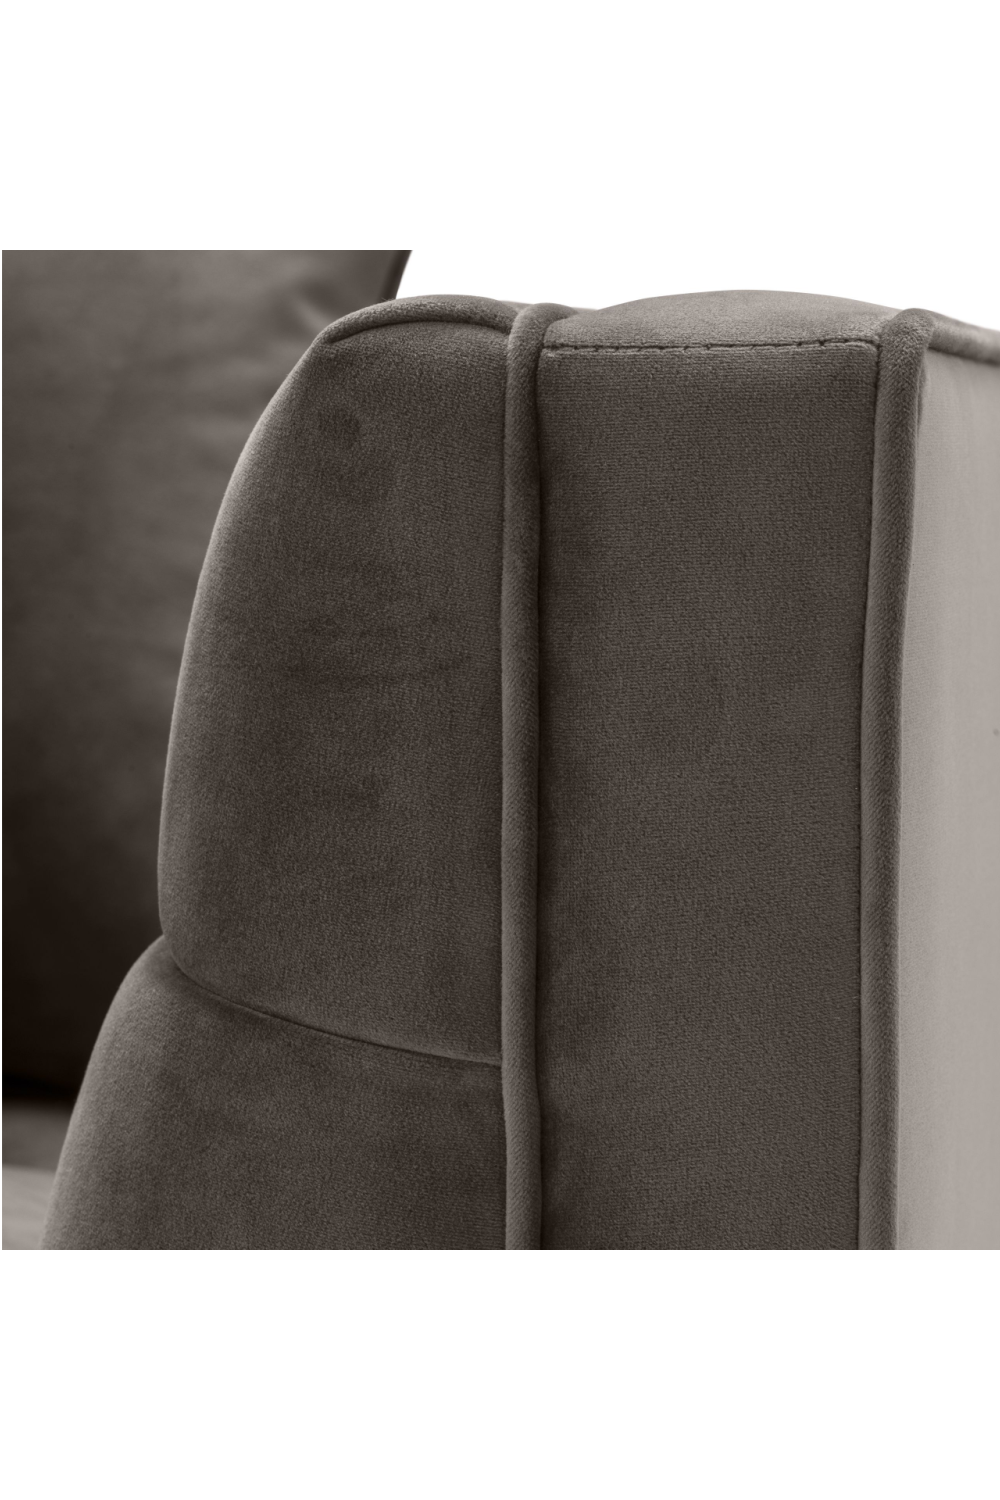 Tufted Velvet Accent Chair | Eichholtz Sienna | Oroa.com